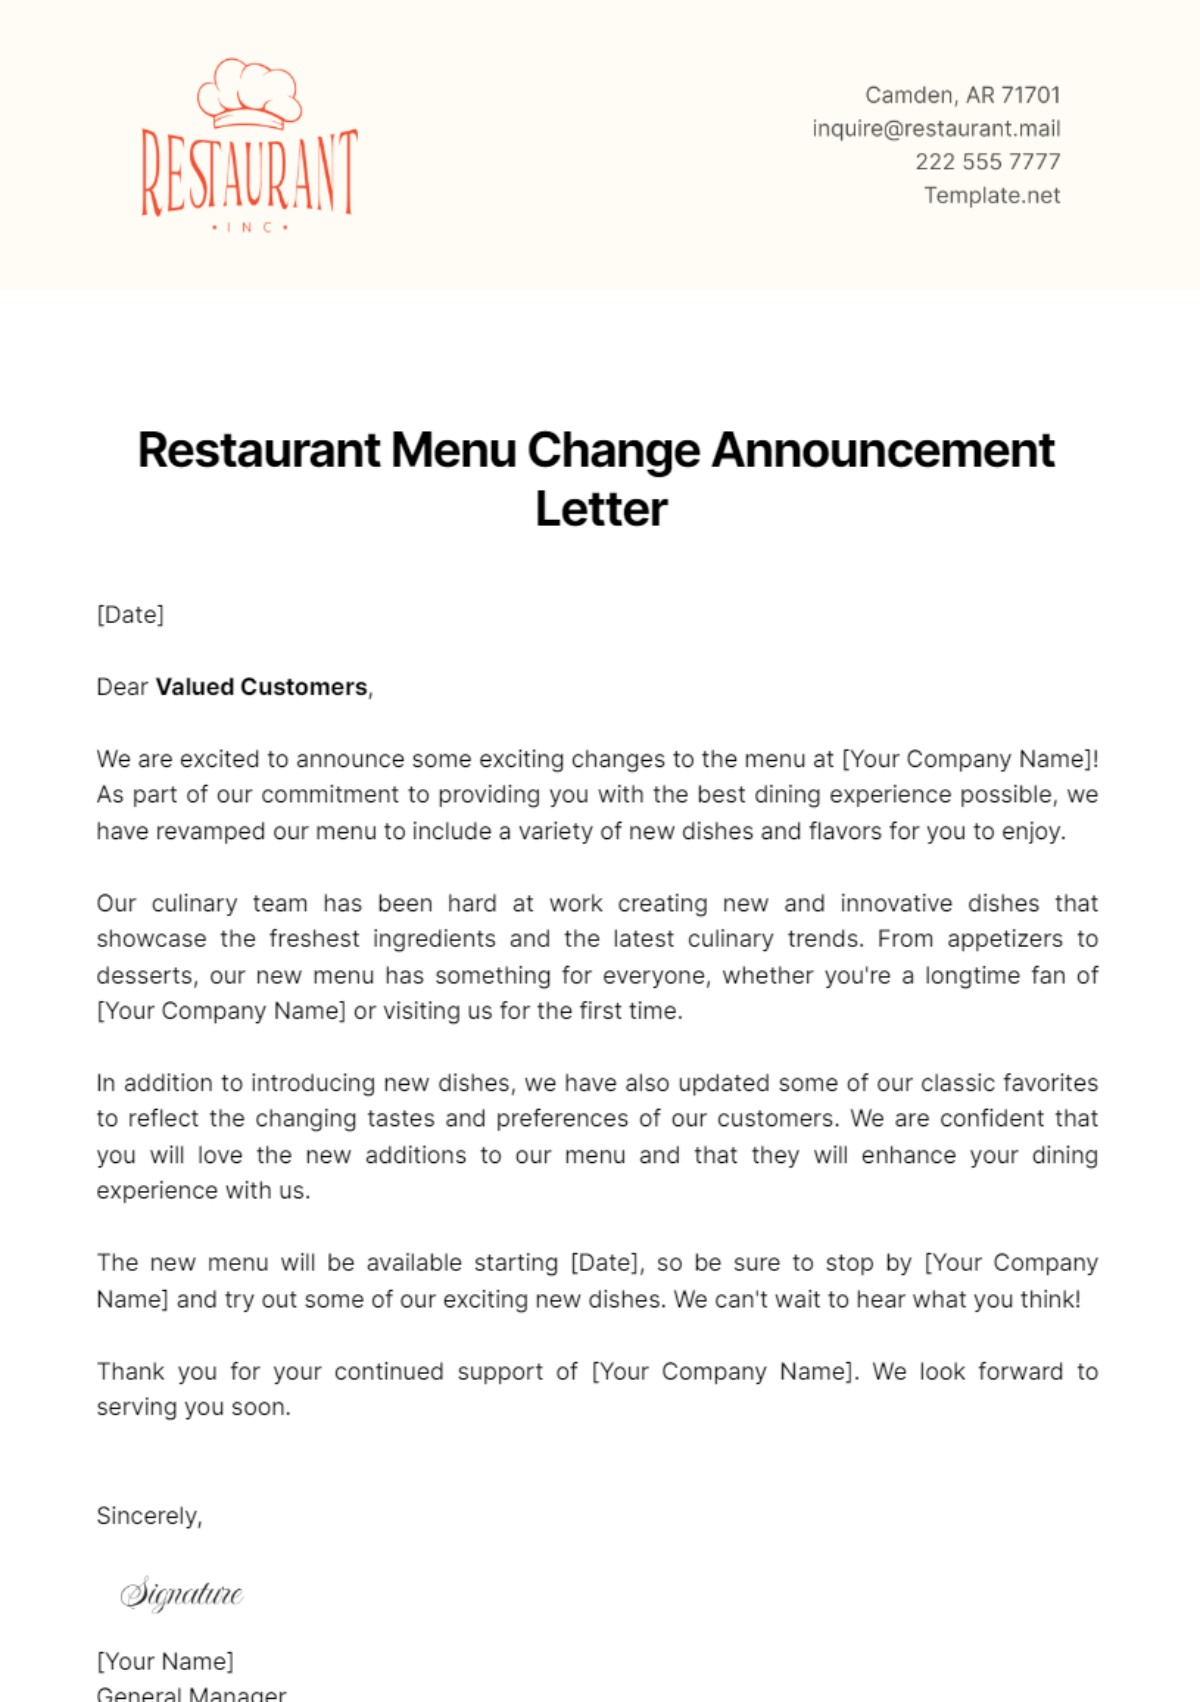 Free Restaurant Menu Change Announcement Letter Template